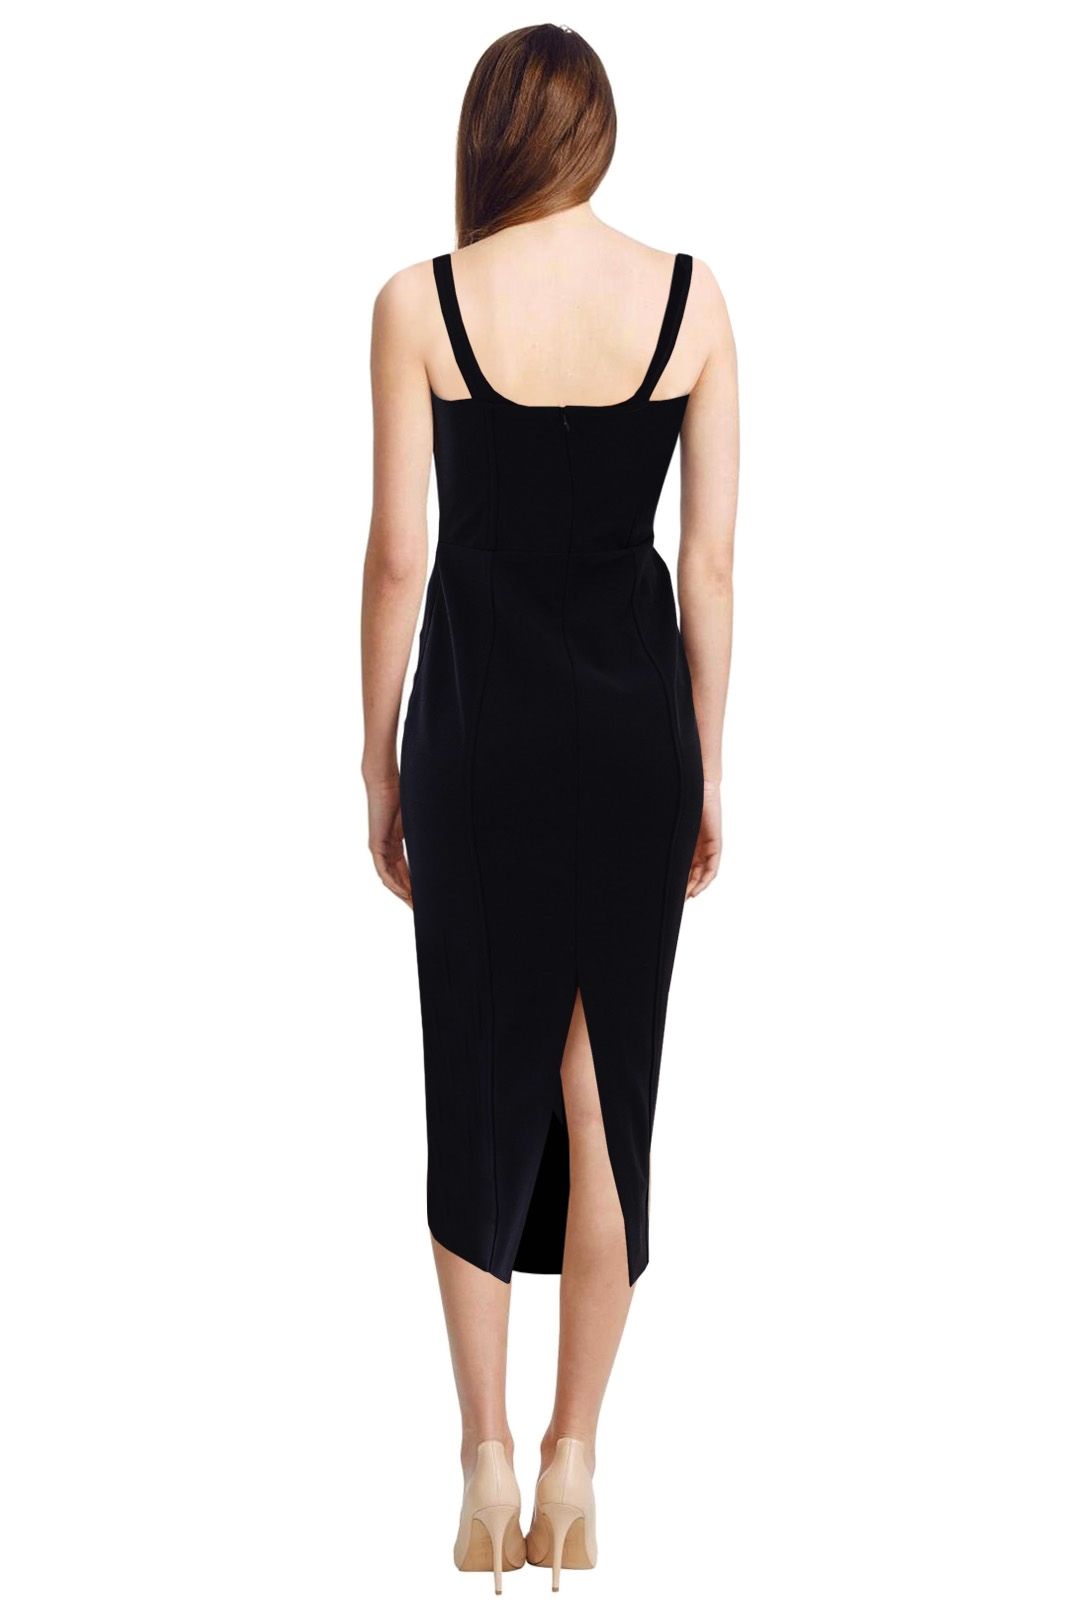 Misha Collection - Lorenza Dress - Black - Back